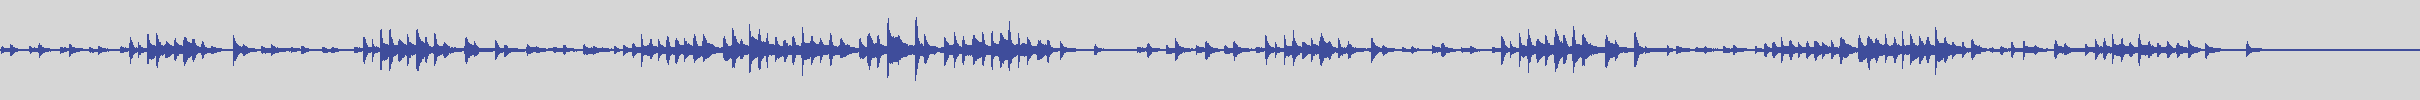 big_music_classic [BMC005] Erik Satie, Corrado Rossi - Gymnopedie N.1 [] audio wave form